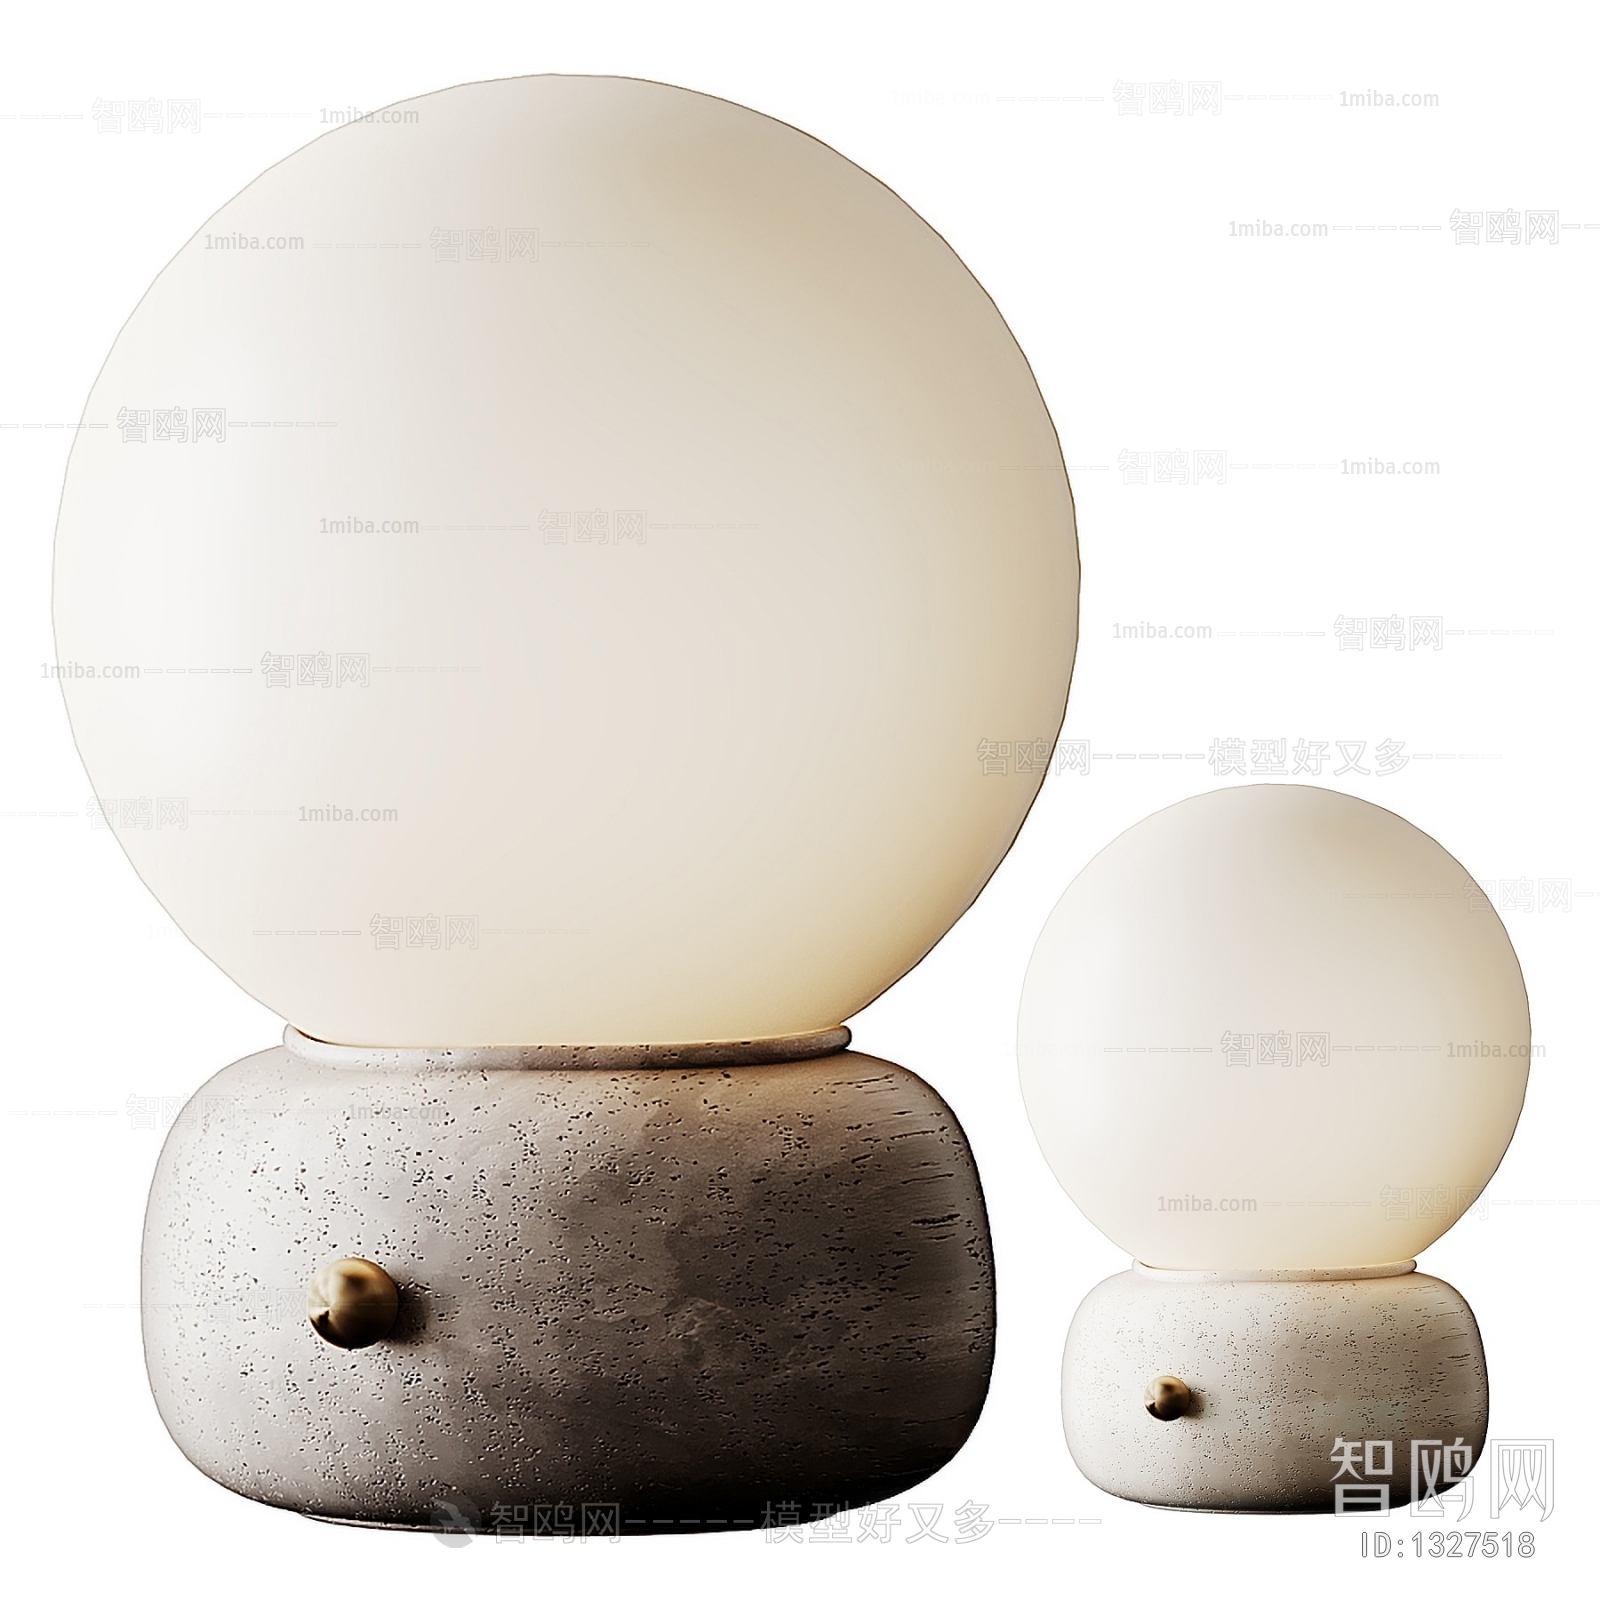 Modern Table Lamp